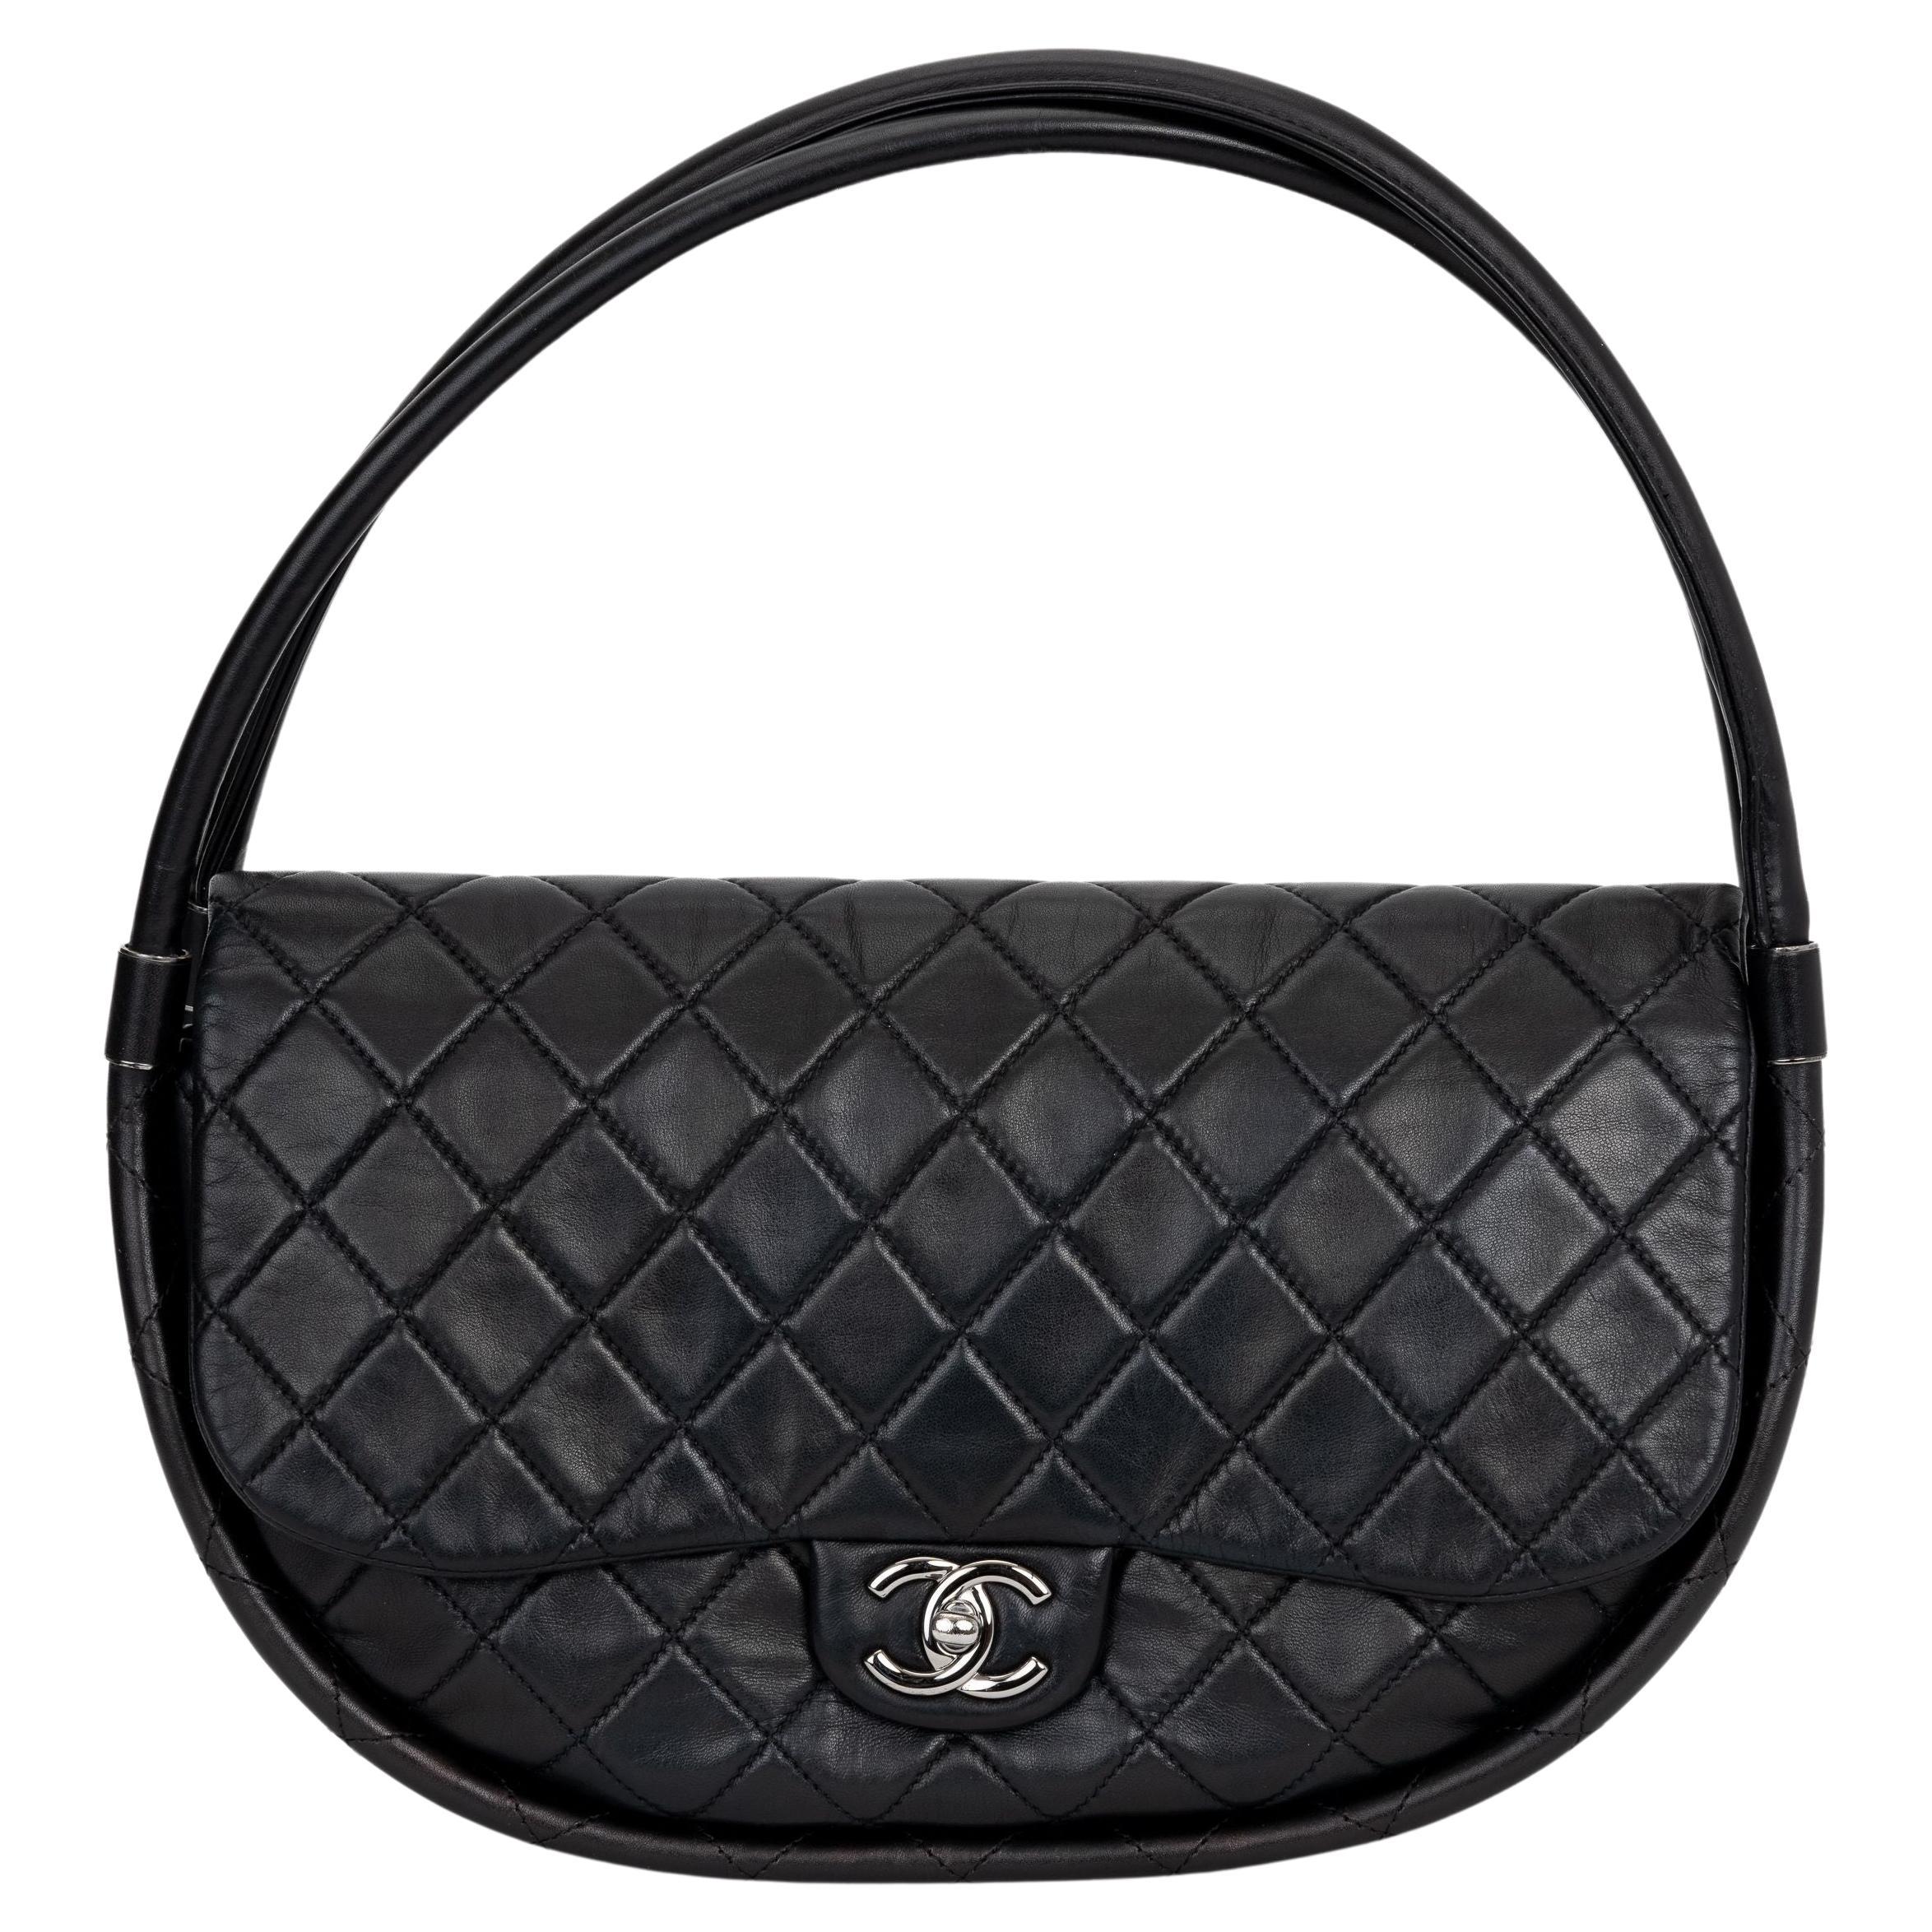 Chanel - Sac Hula Hoop noir de collection en vente